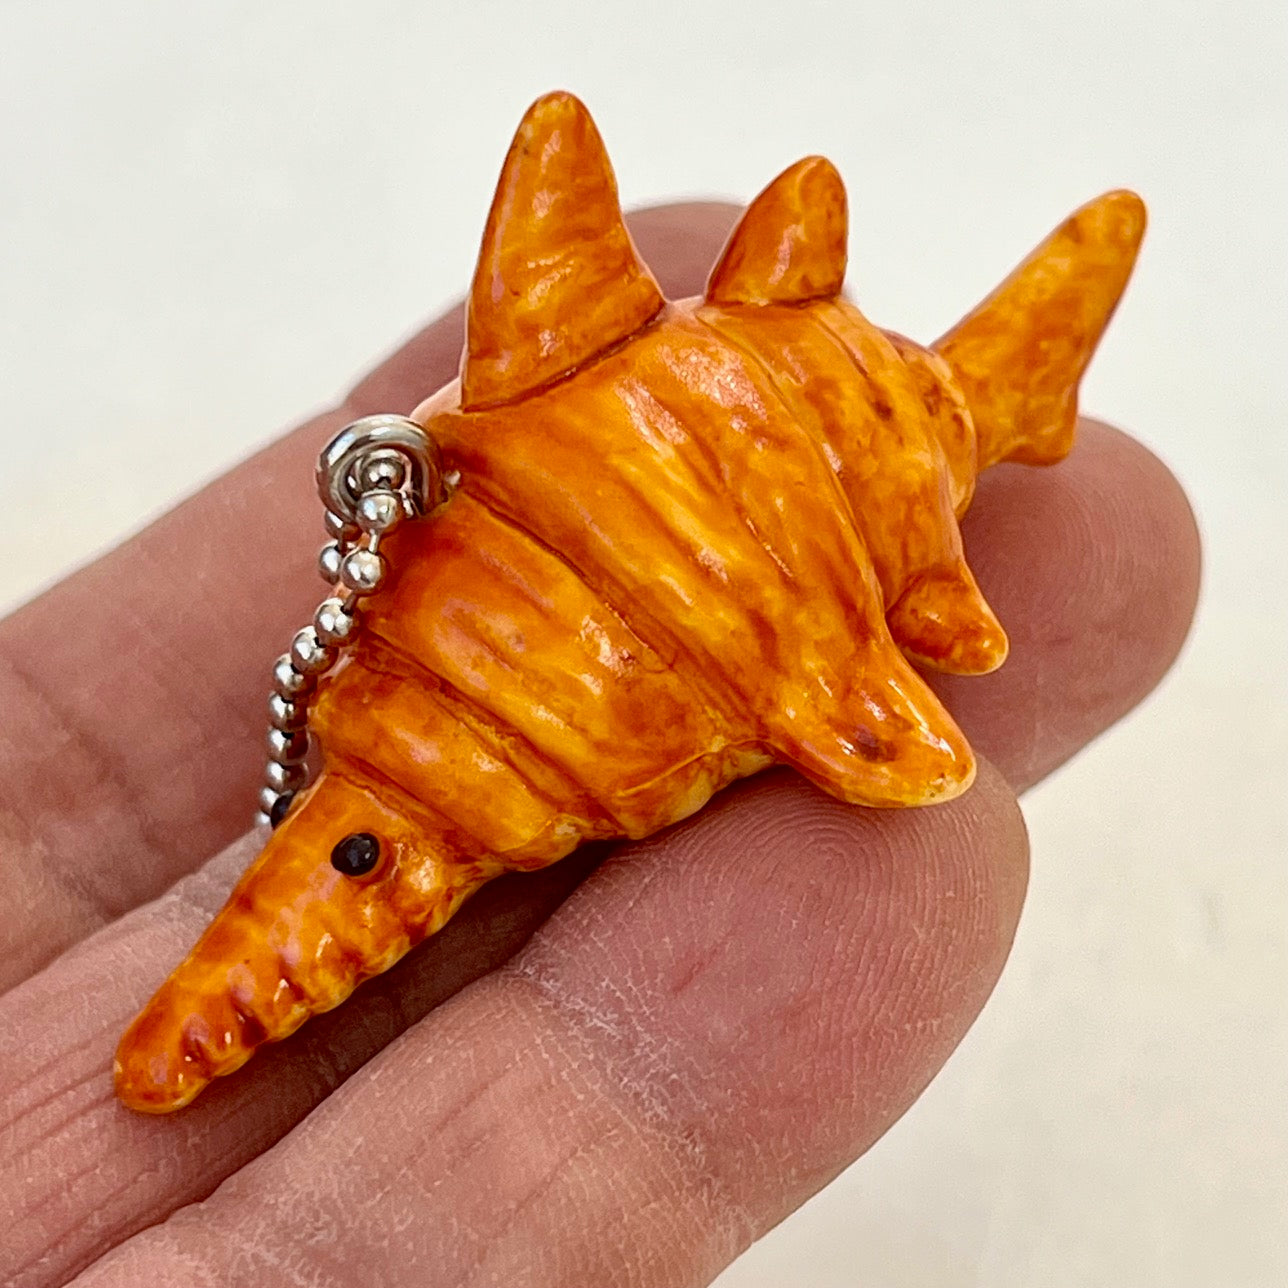 X 70281 Shark Croissant Figurine Capsule-DISCONTINUED